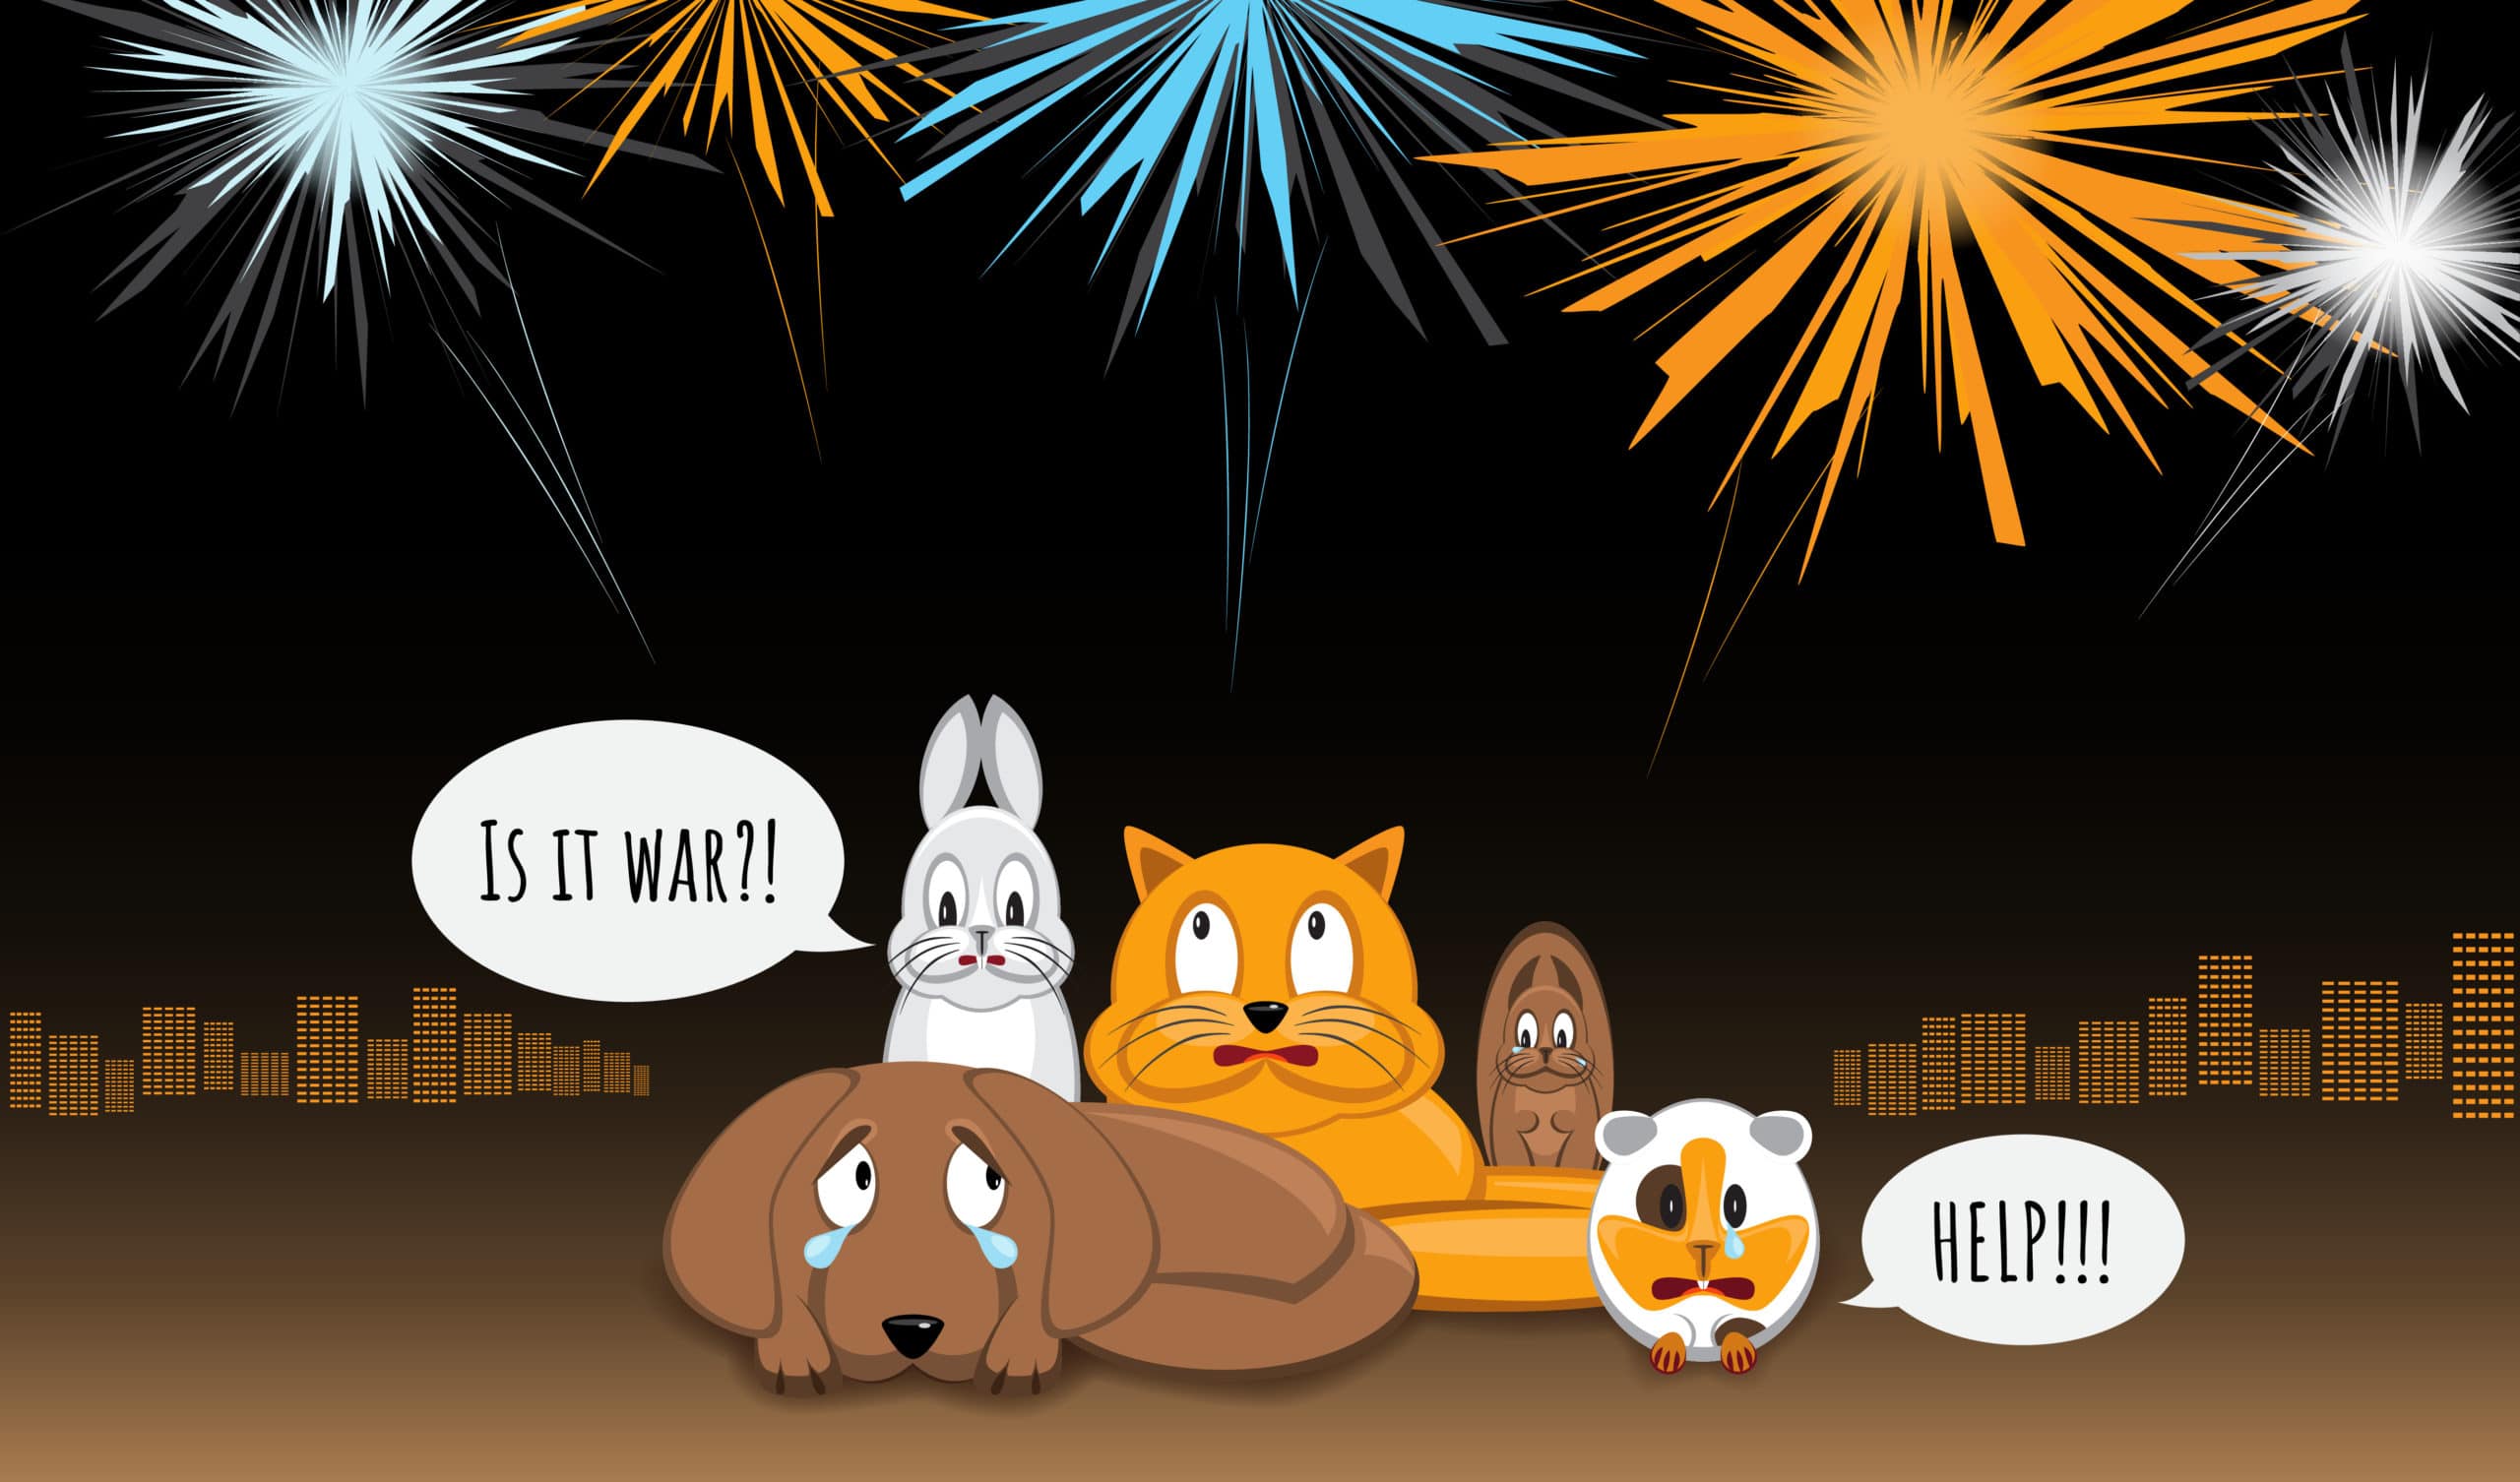 Pet friendly fireworks